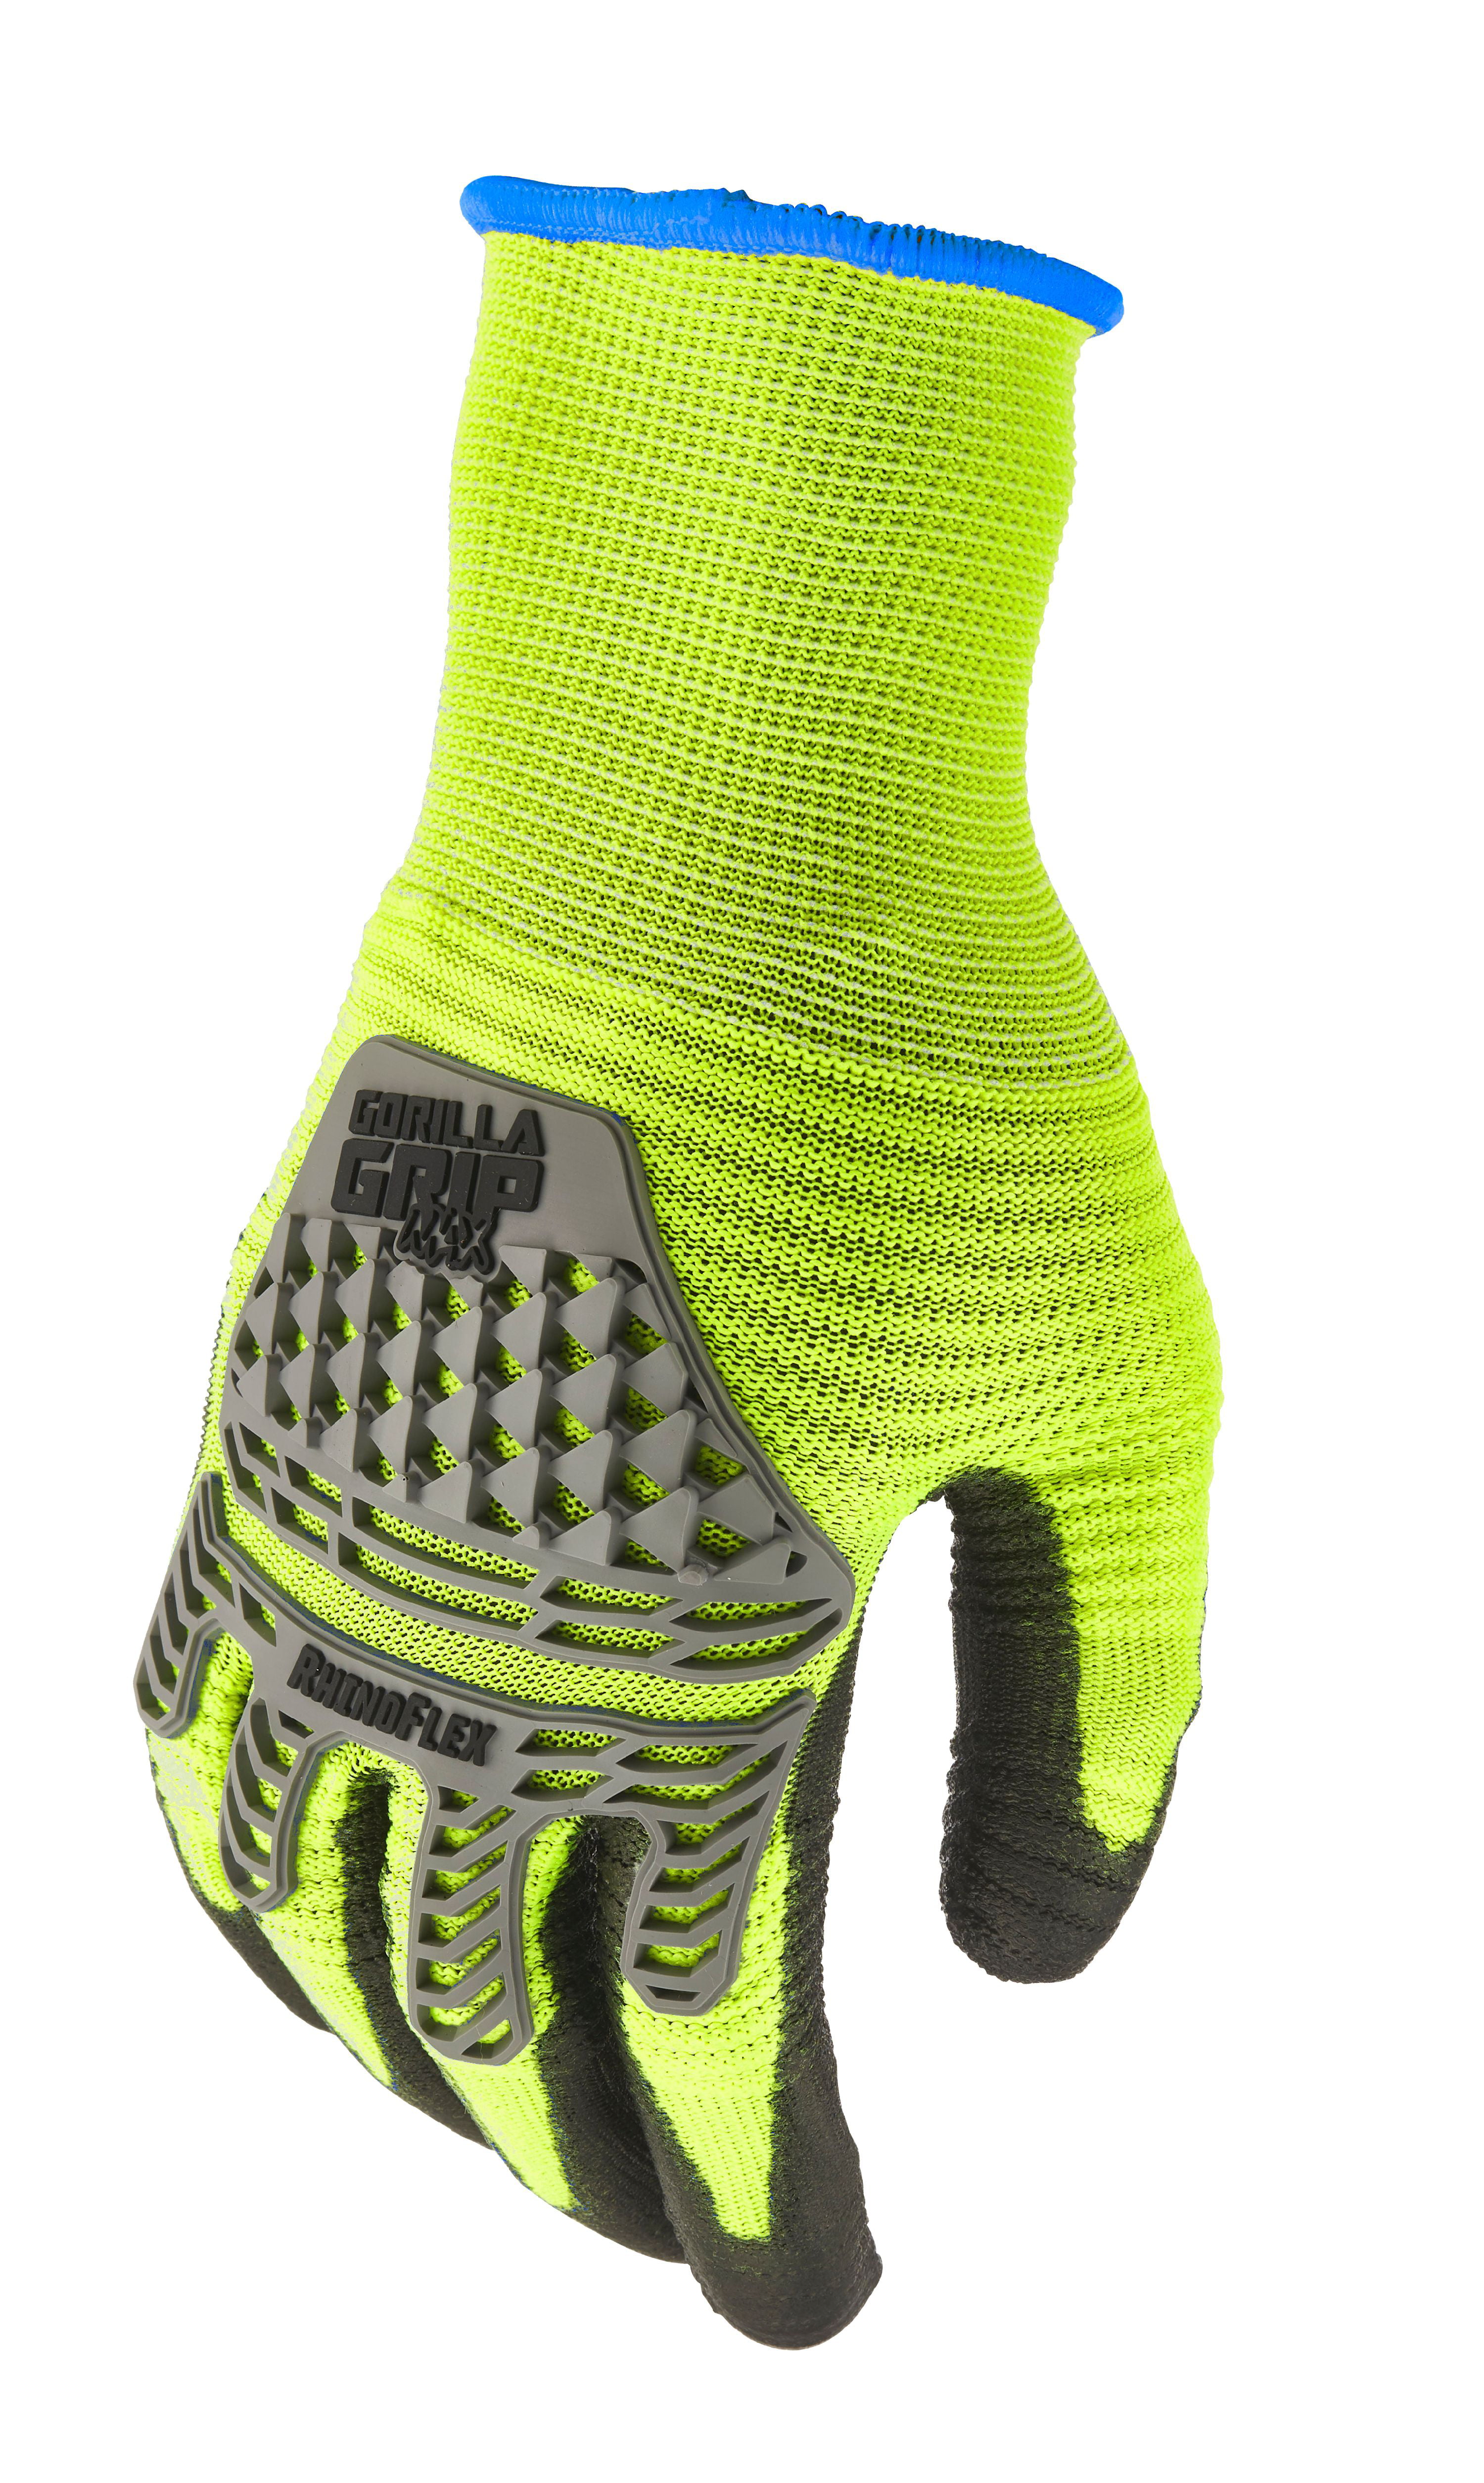 Gorilla Grip A5 Cut Protection Filet Gloves, No Slip Polymer Grip, Grey,  Size XXL, Model# 25894-26 